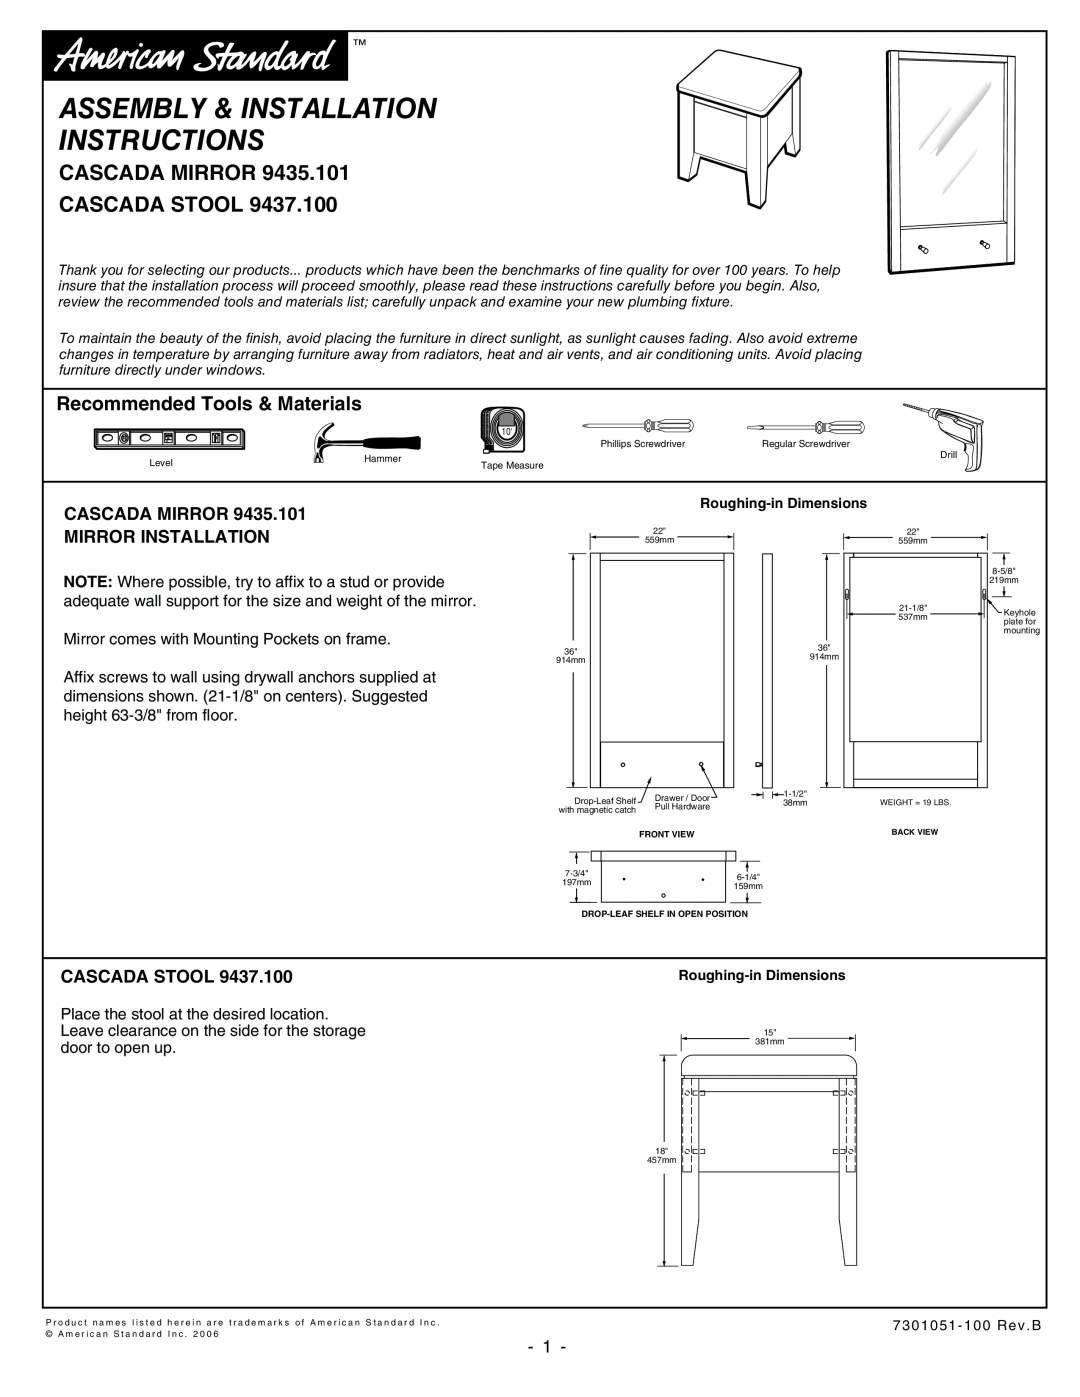 American Standard 9437.100, 9435.101 installation instructions Cascada Mirror Cascada Stool, Recommended Tools & Materials 